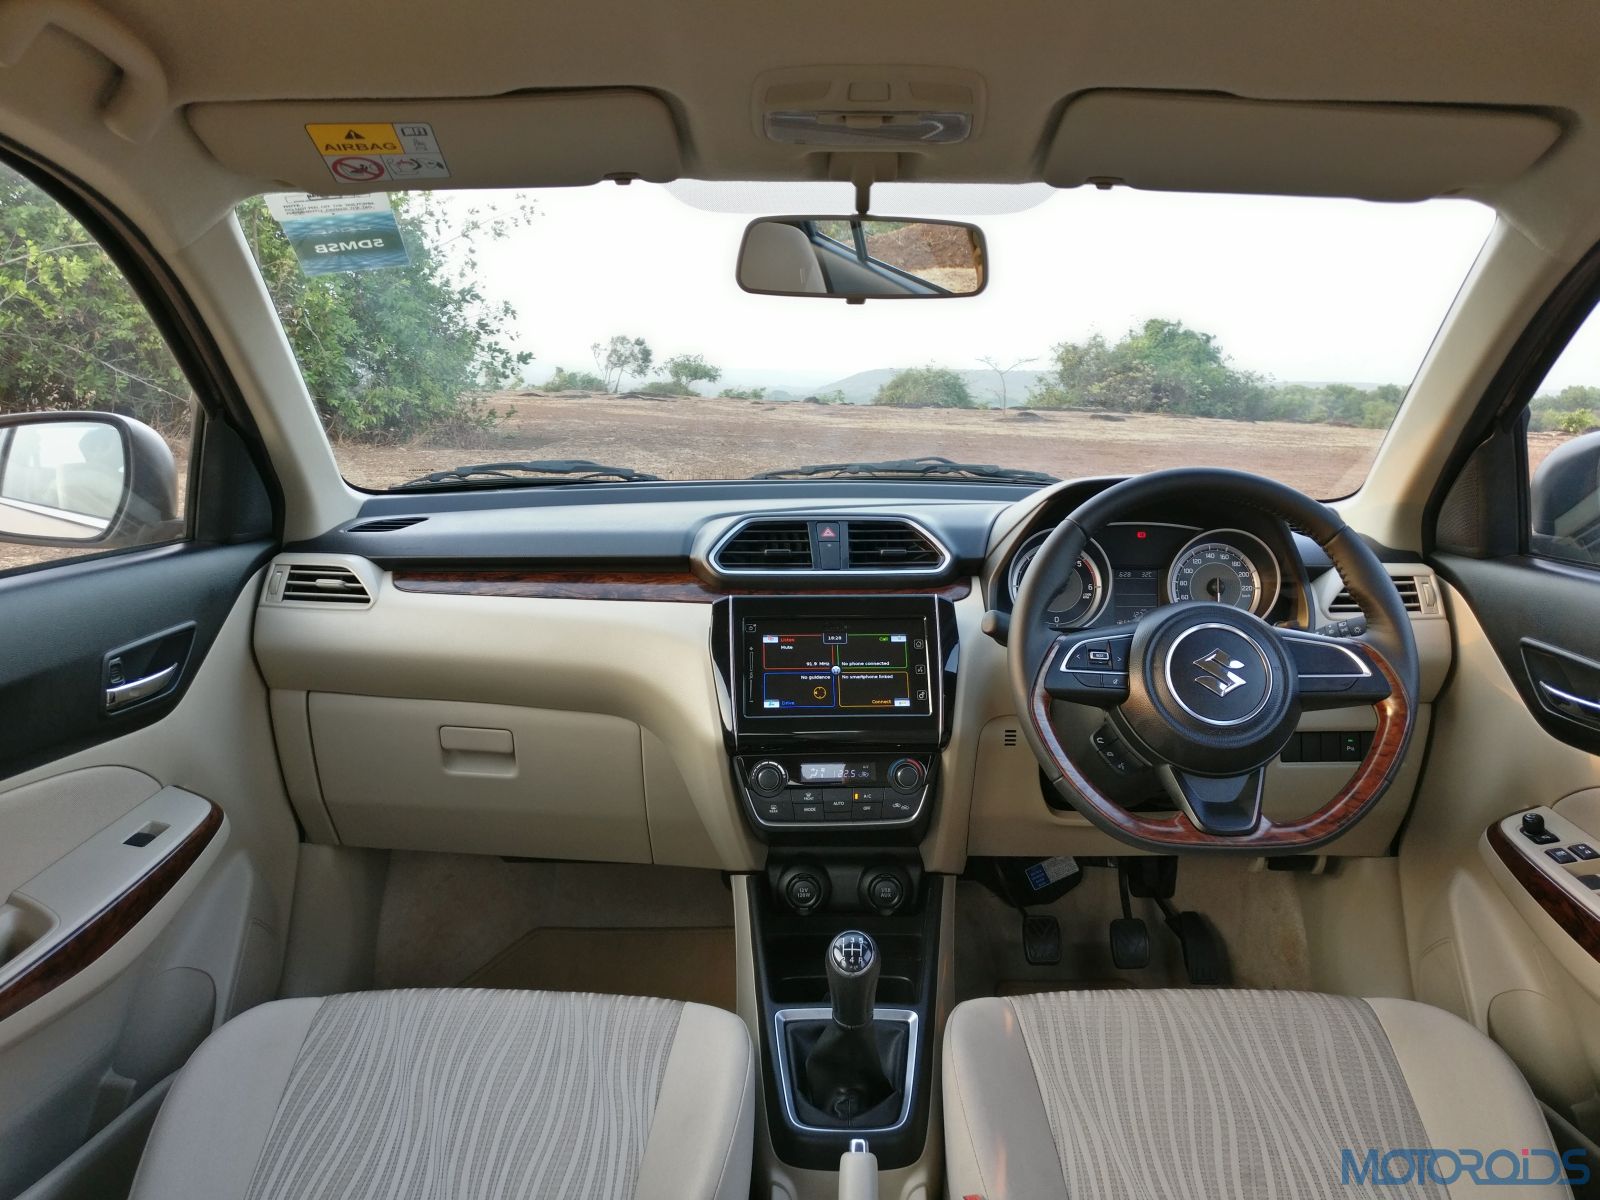 New Maruti Suzuki Dzire India Review Price Specs Mileage